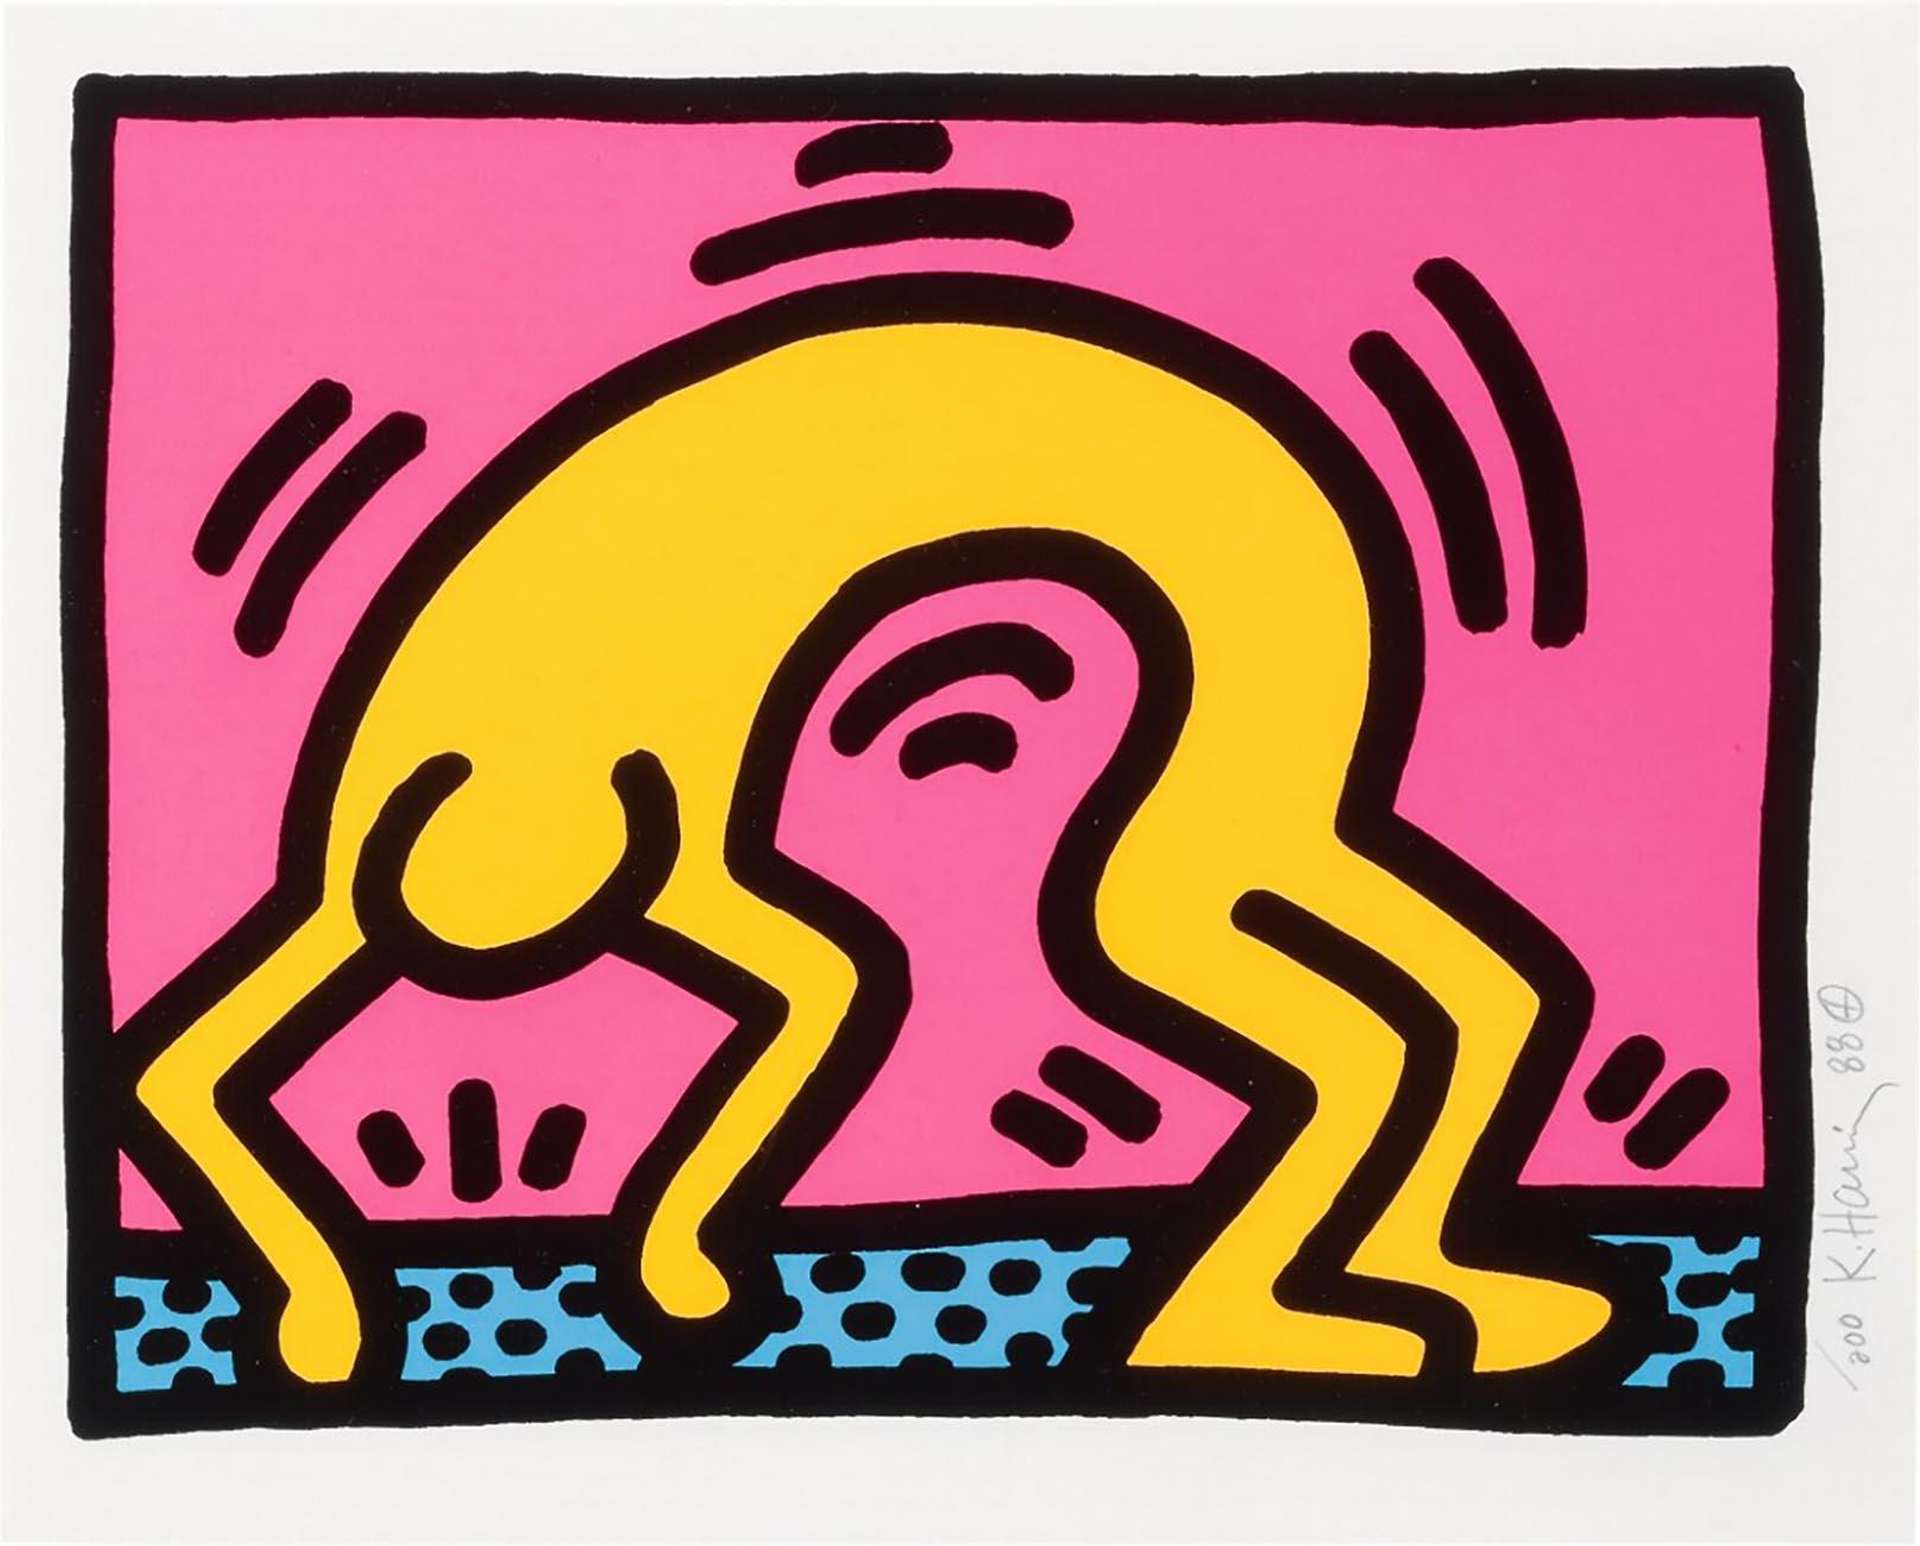 Pop Shop II Plate III by Keith Haring 